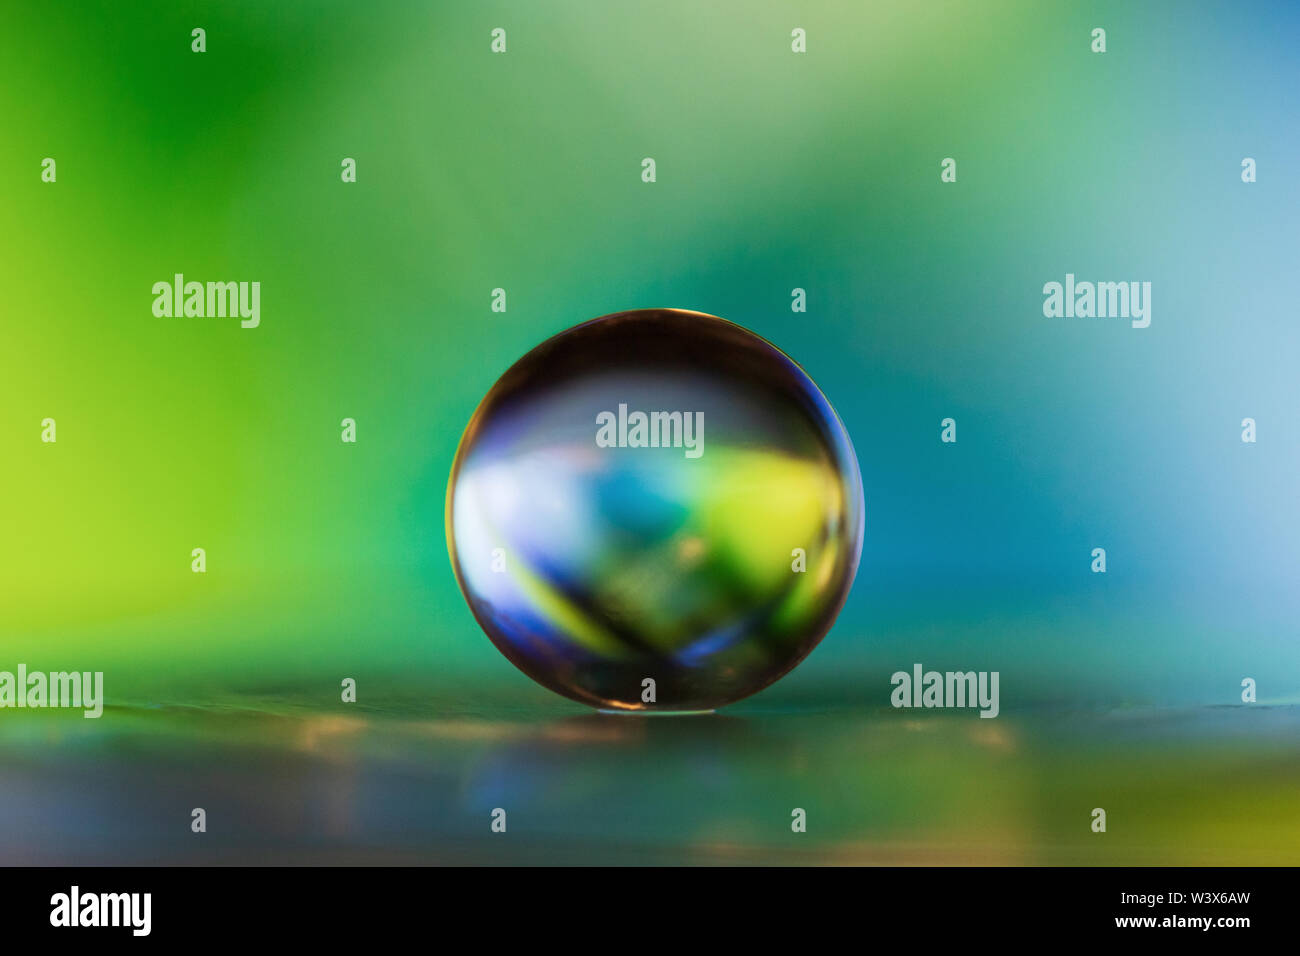 Bola de agua gel verde fotografías e imágenes de alta resolución - Alamy